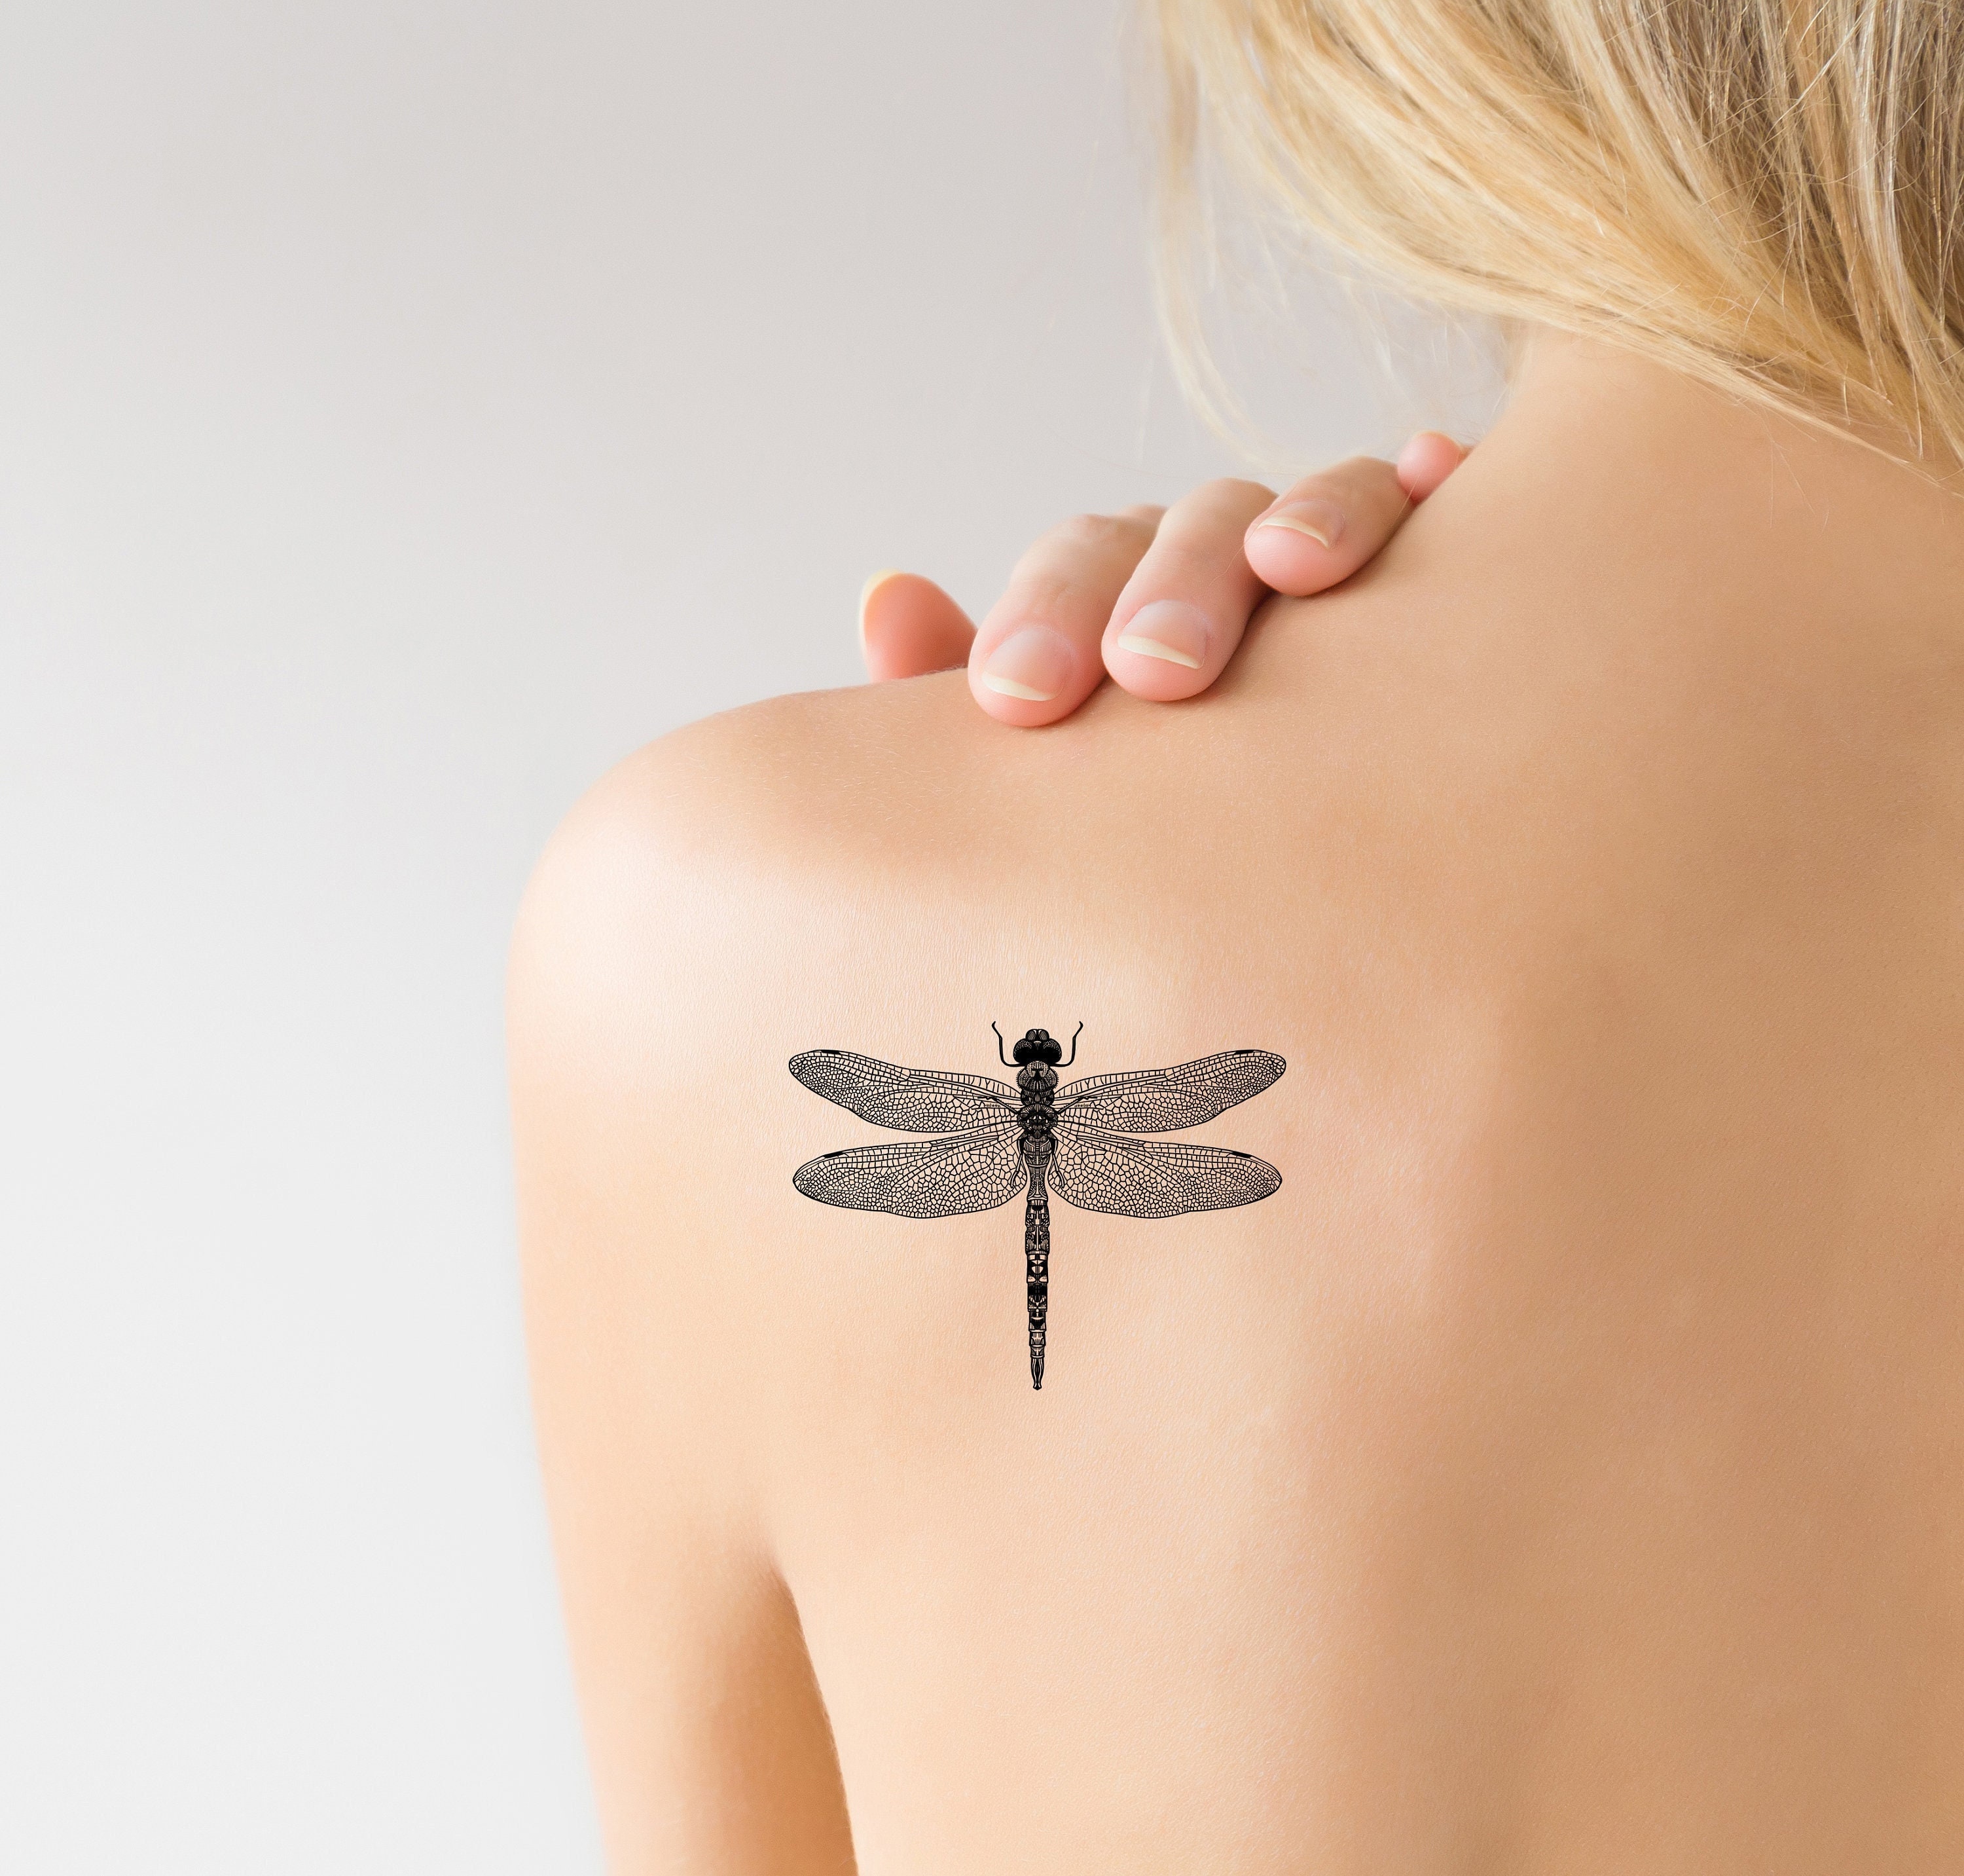 45 Fascinating Dragonfly Tattoo Designs - TattooBlend